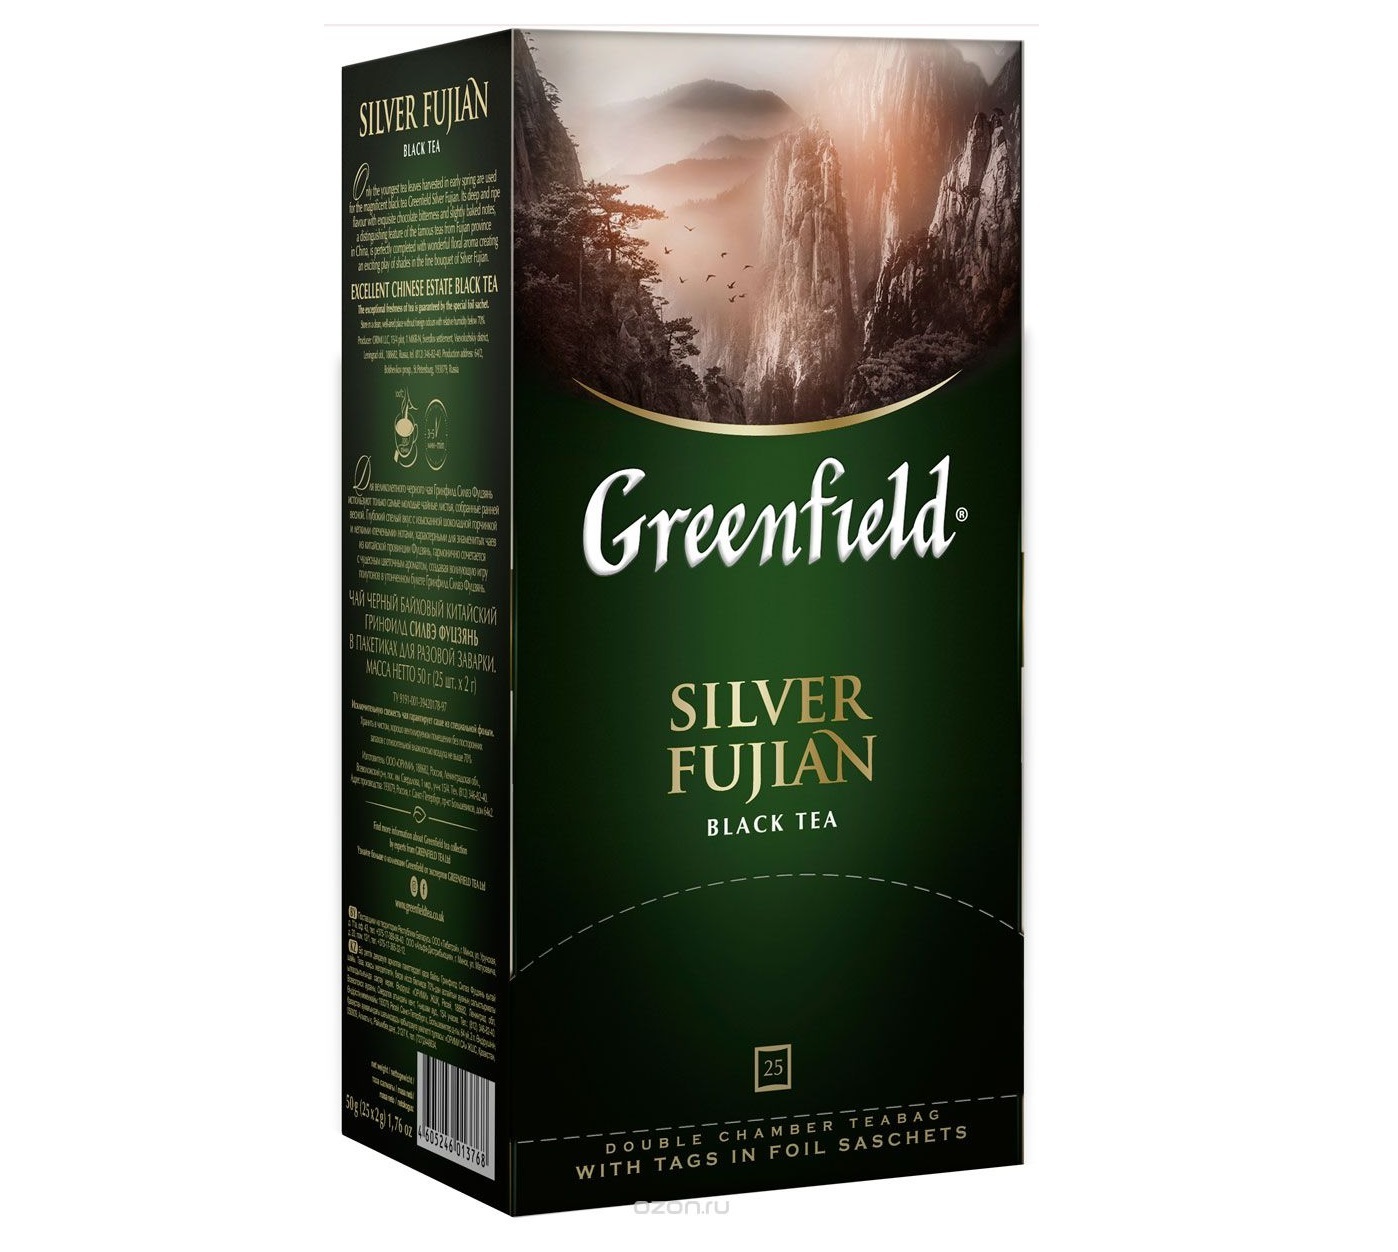 Greenfield Silver Fujian